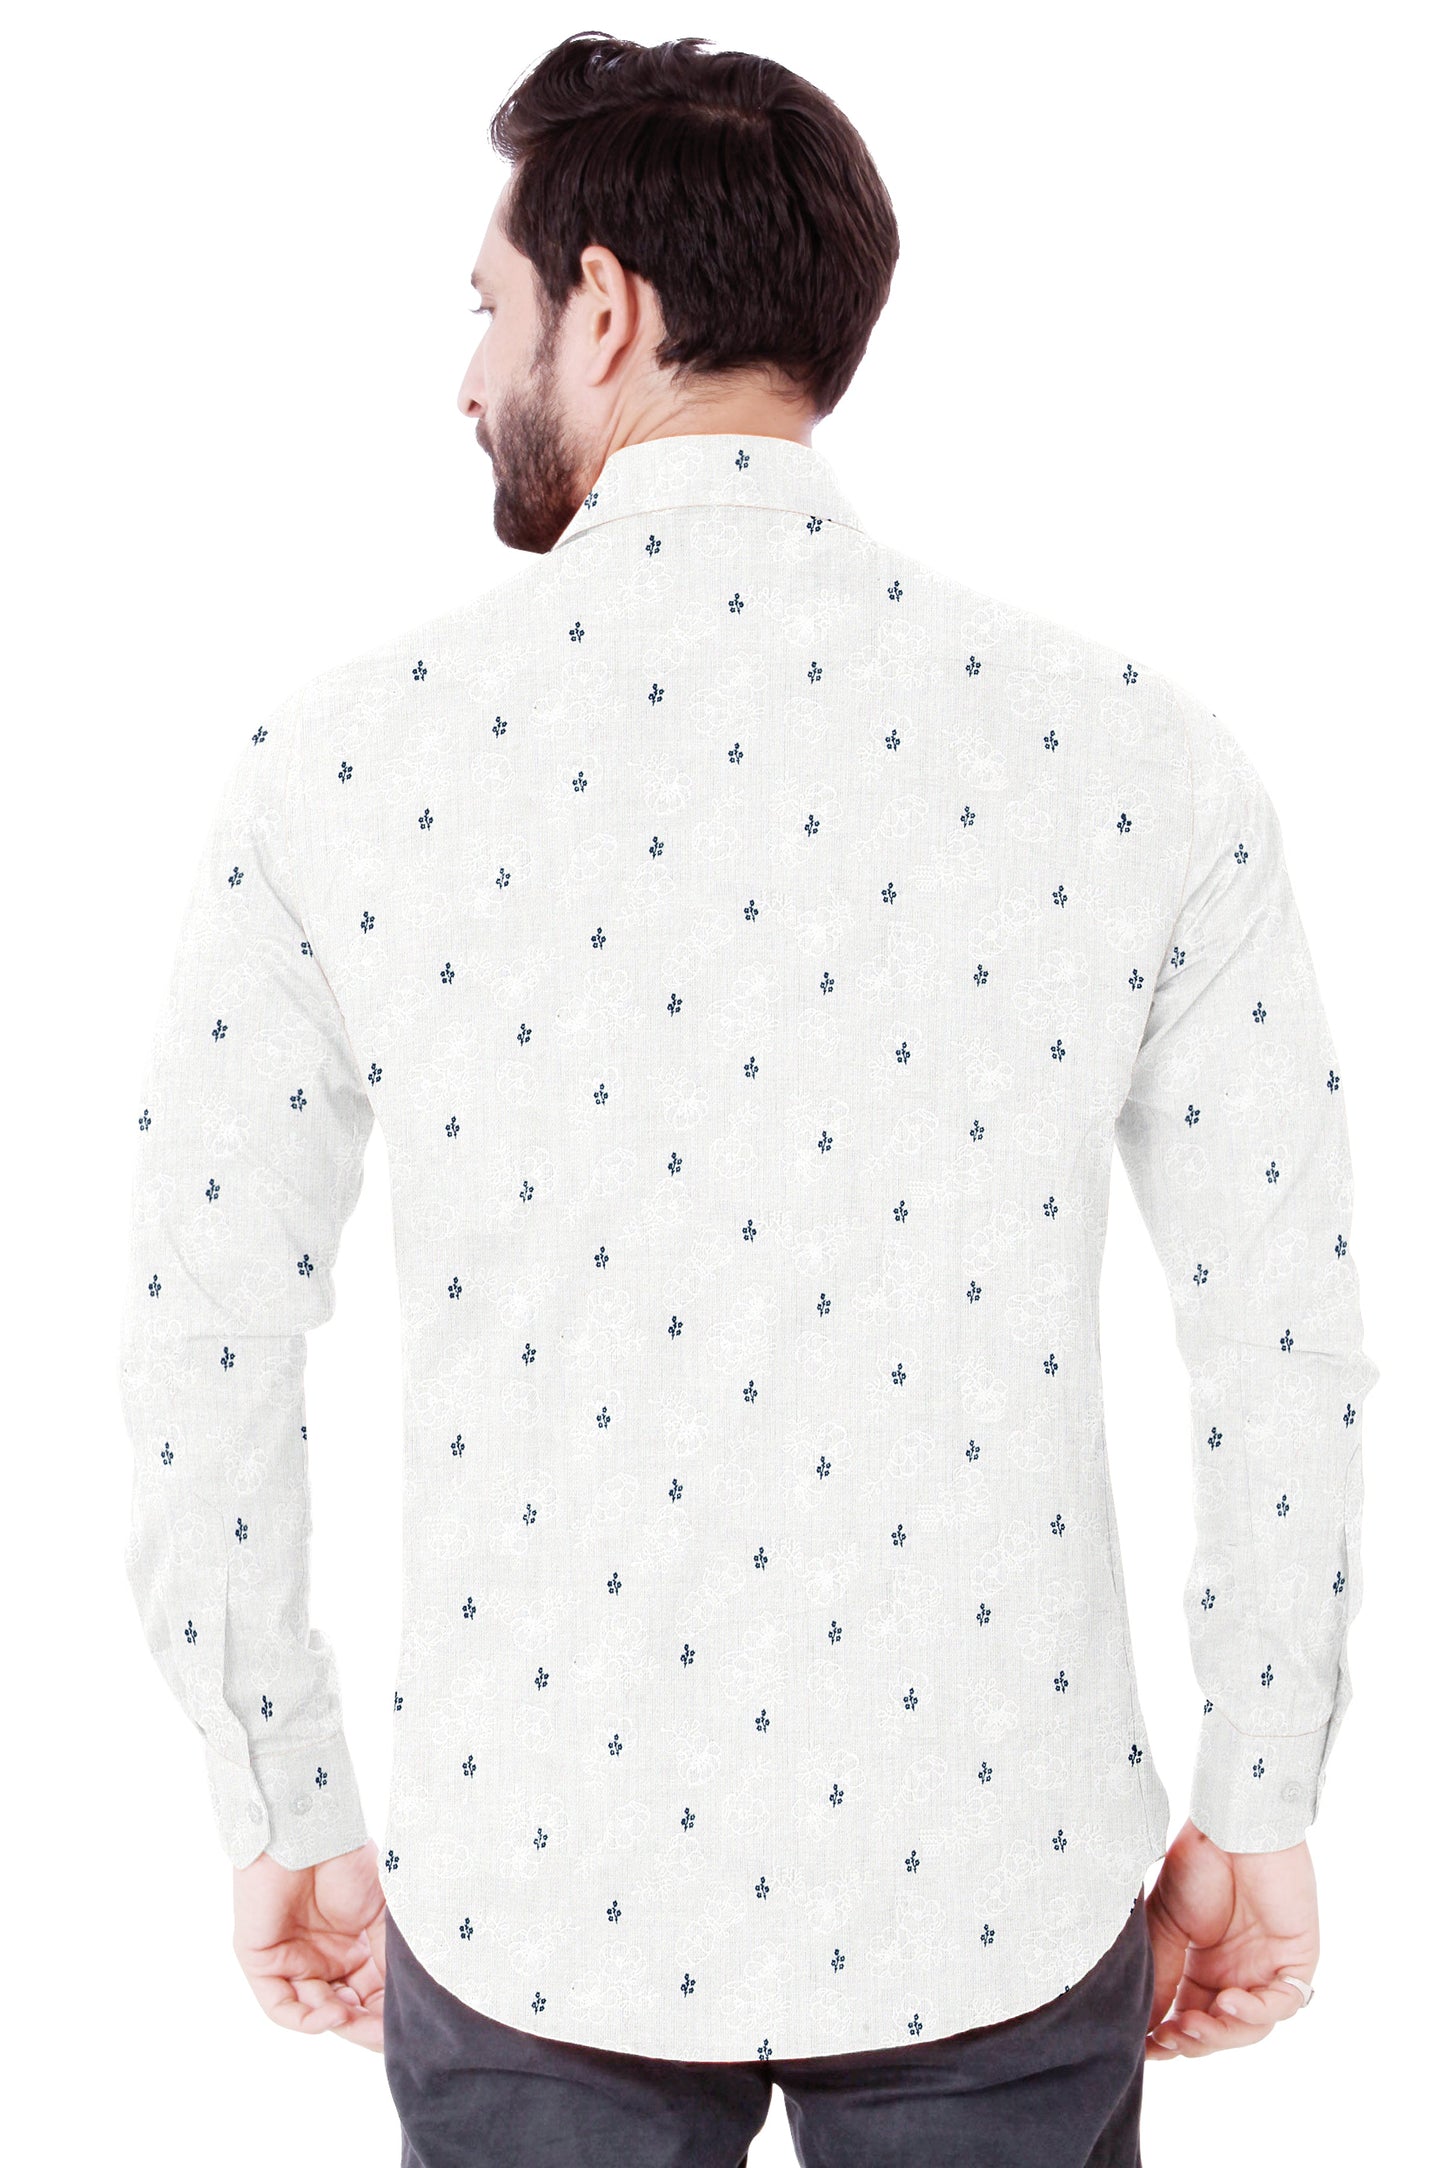 Men's White Flower Printed Casual Shirt Full Sleeves 100% Cotton - Styleflea